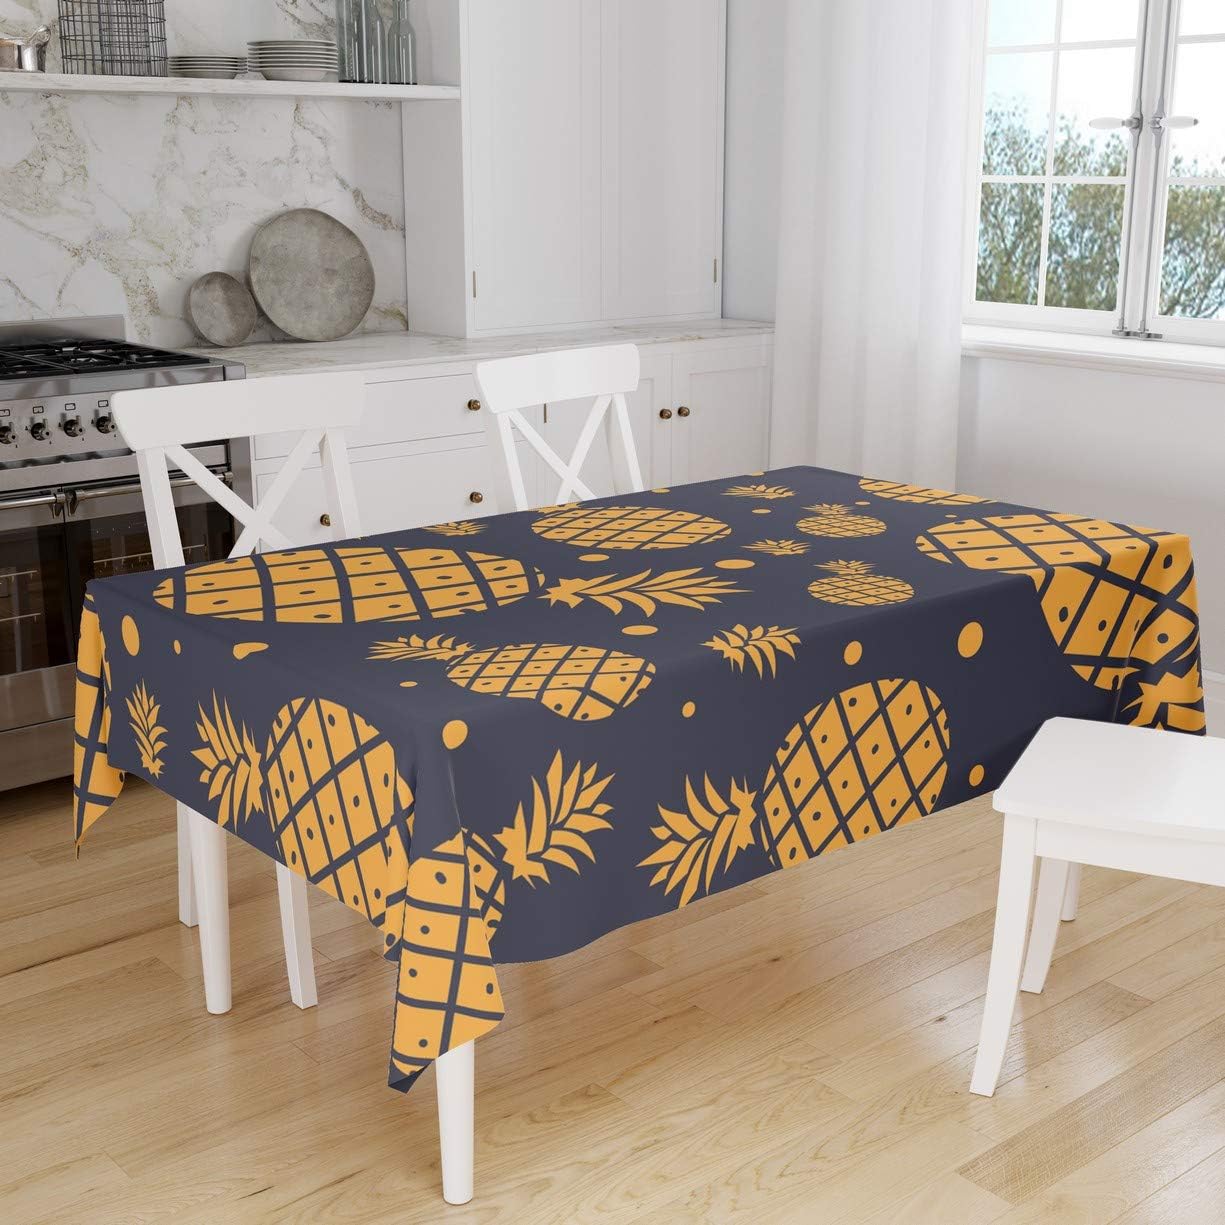 Bonamaison Orange Pineapple Design Black Tablecloth 140 x 160cm RRP 26.44 CLEARANCE XL 16.99